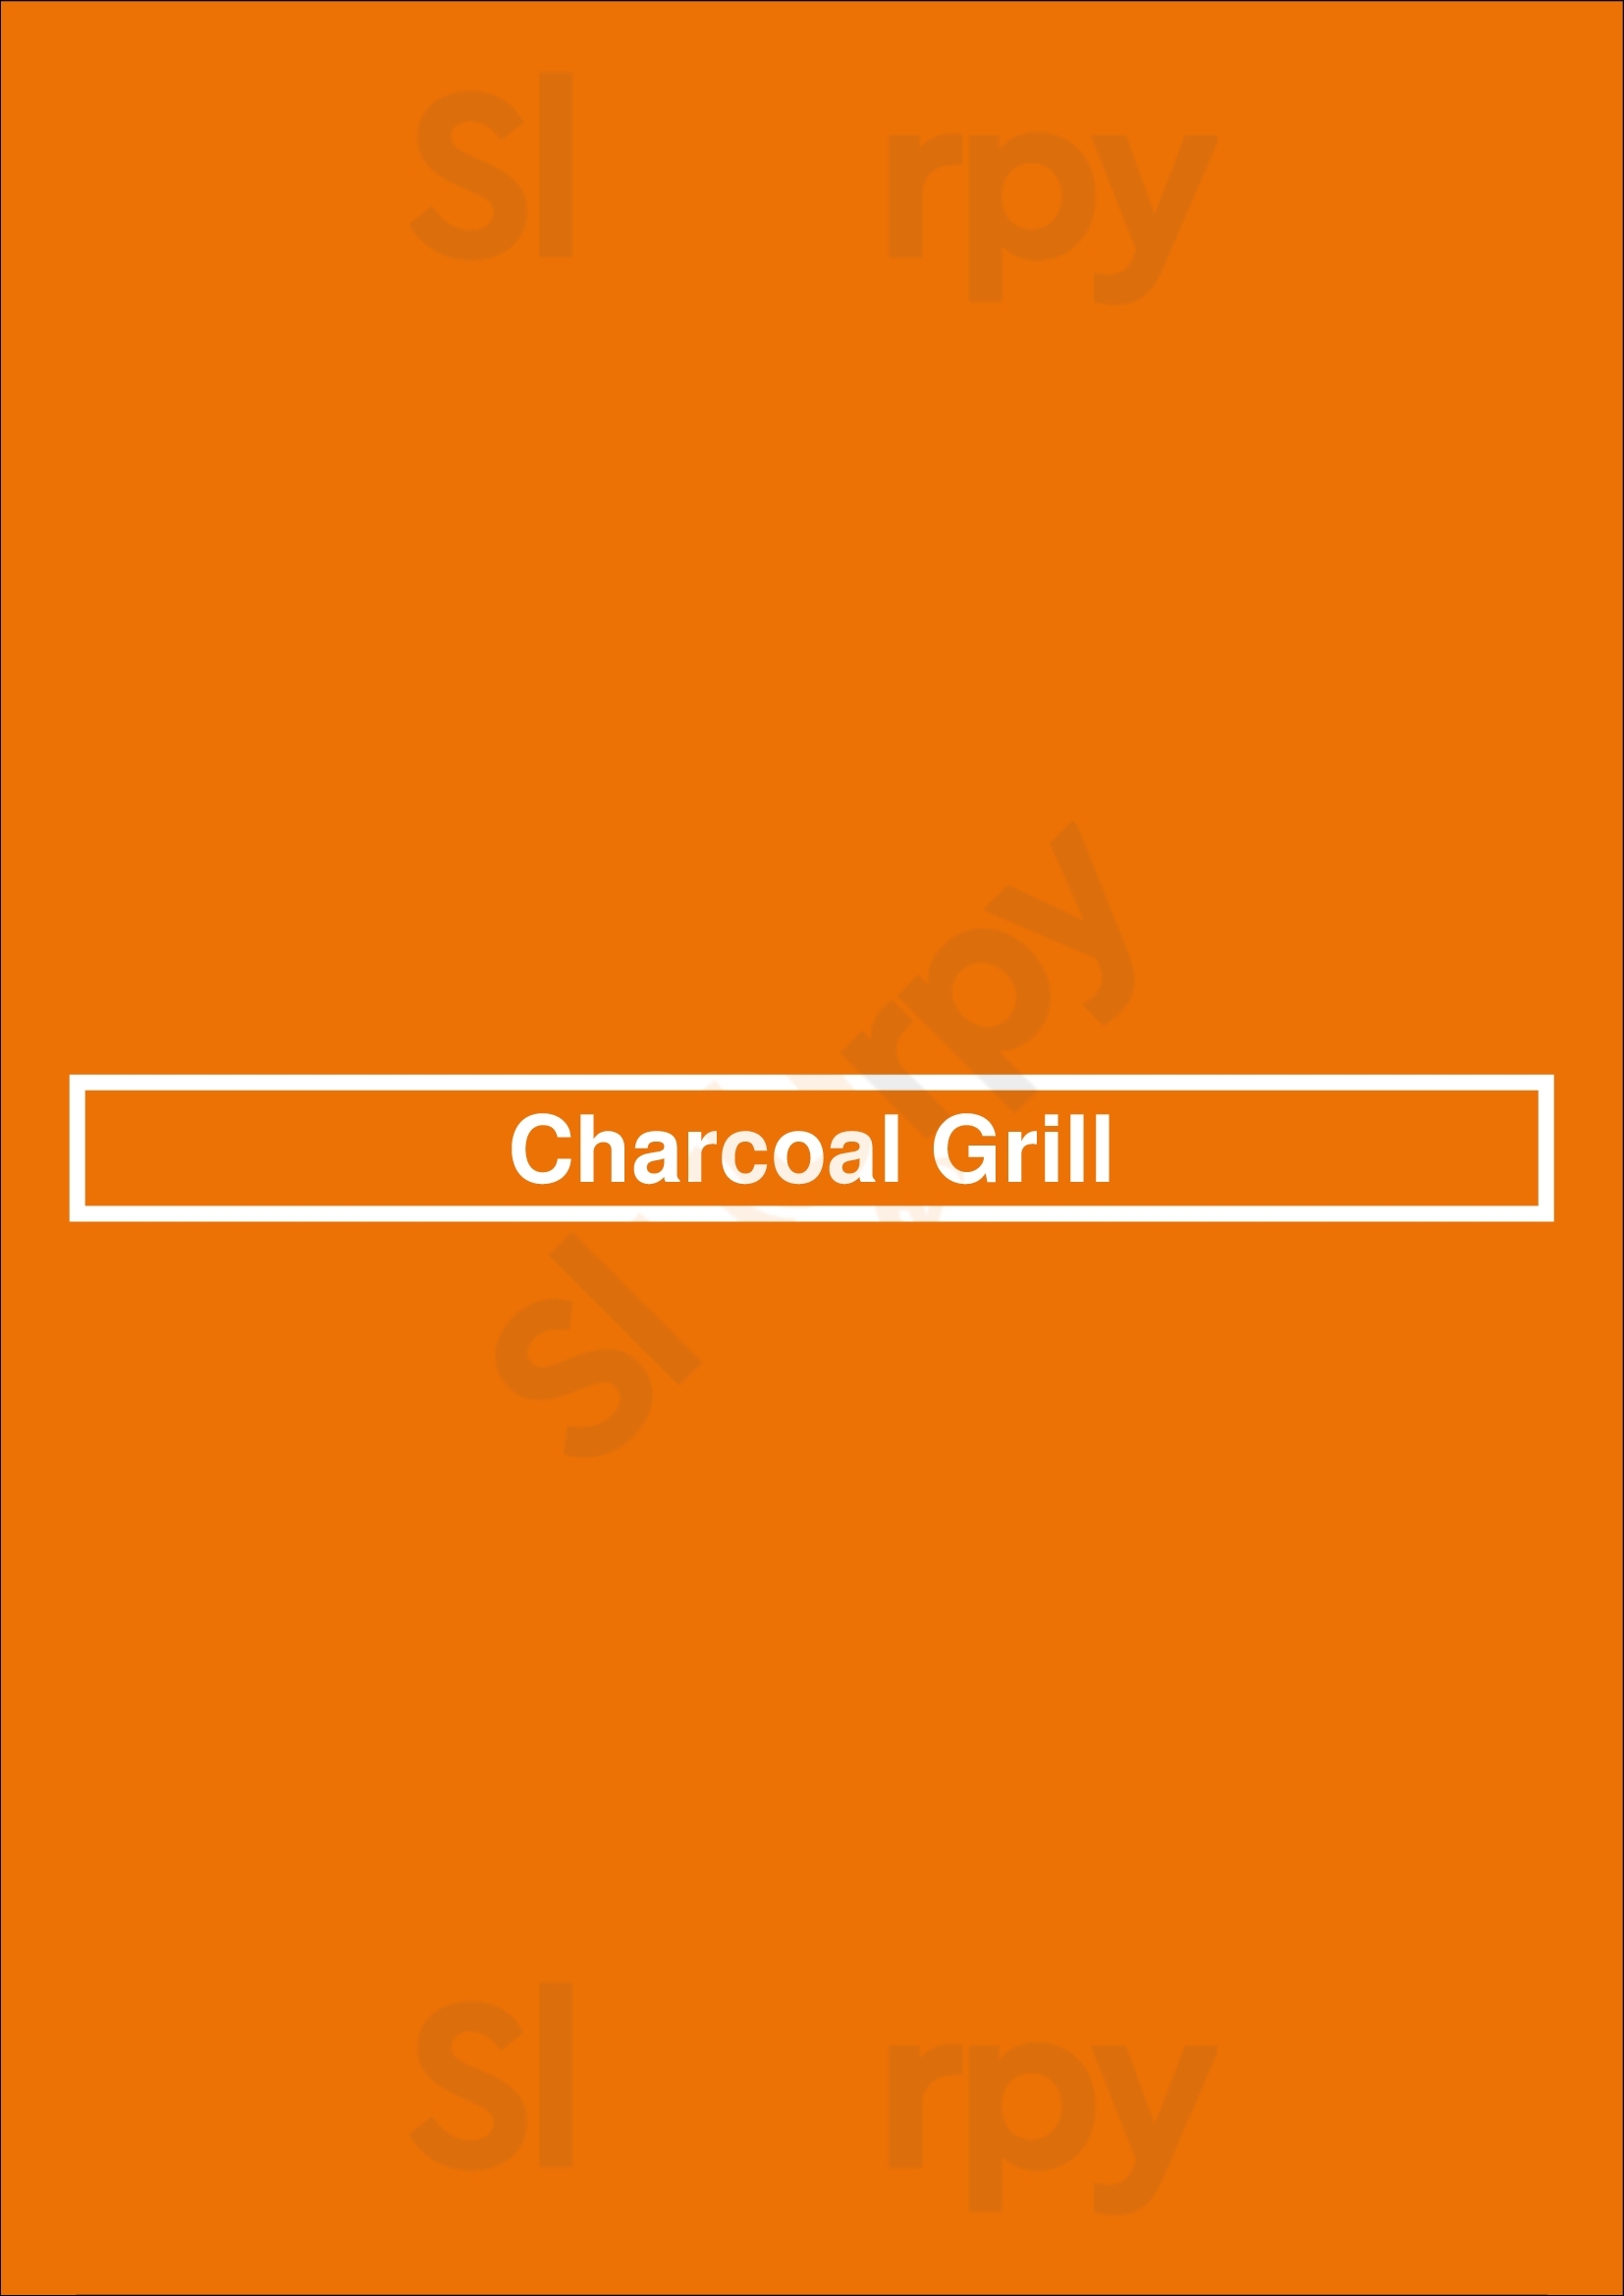 Charcoal Grill Stroud Menu - 1